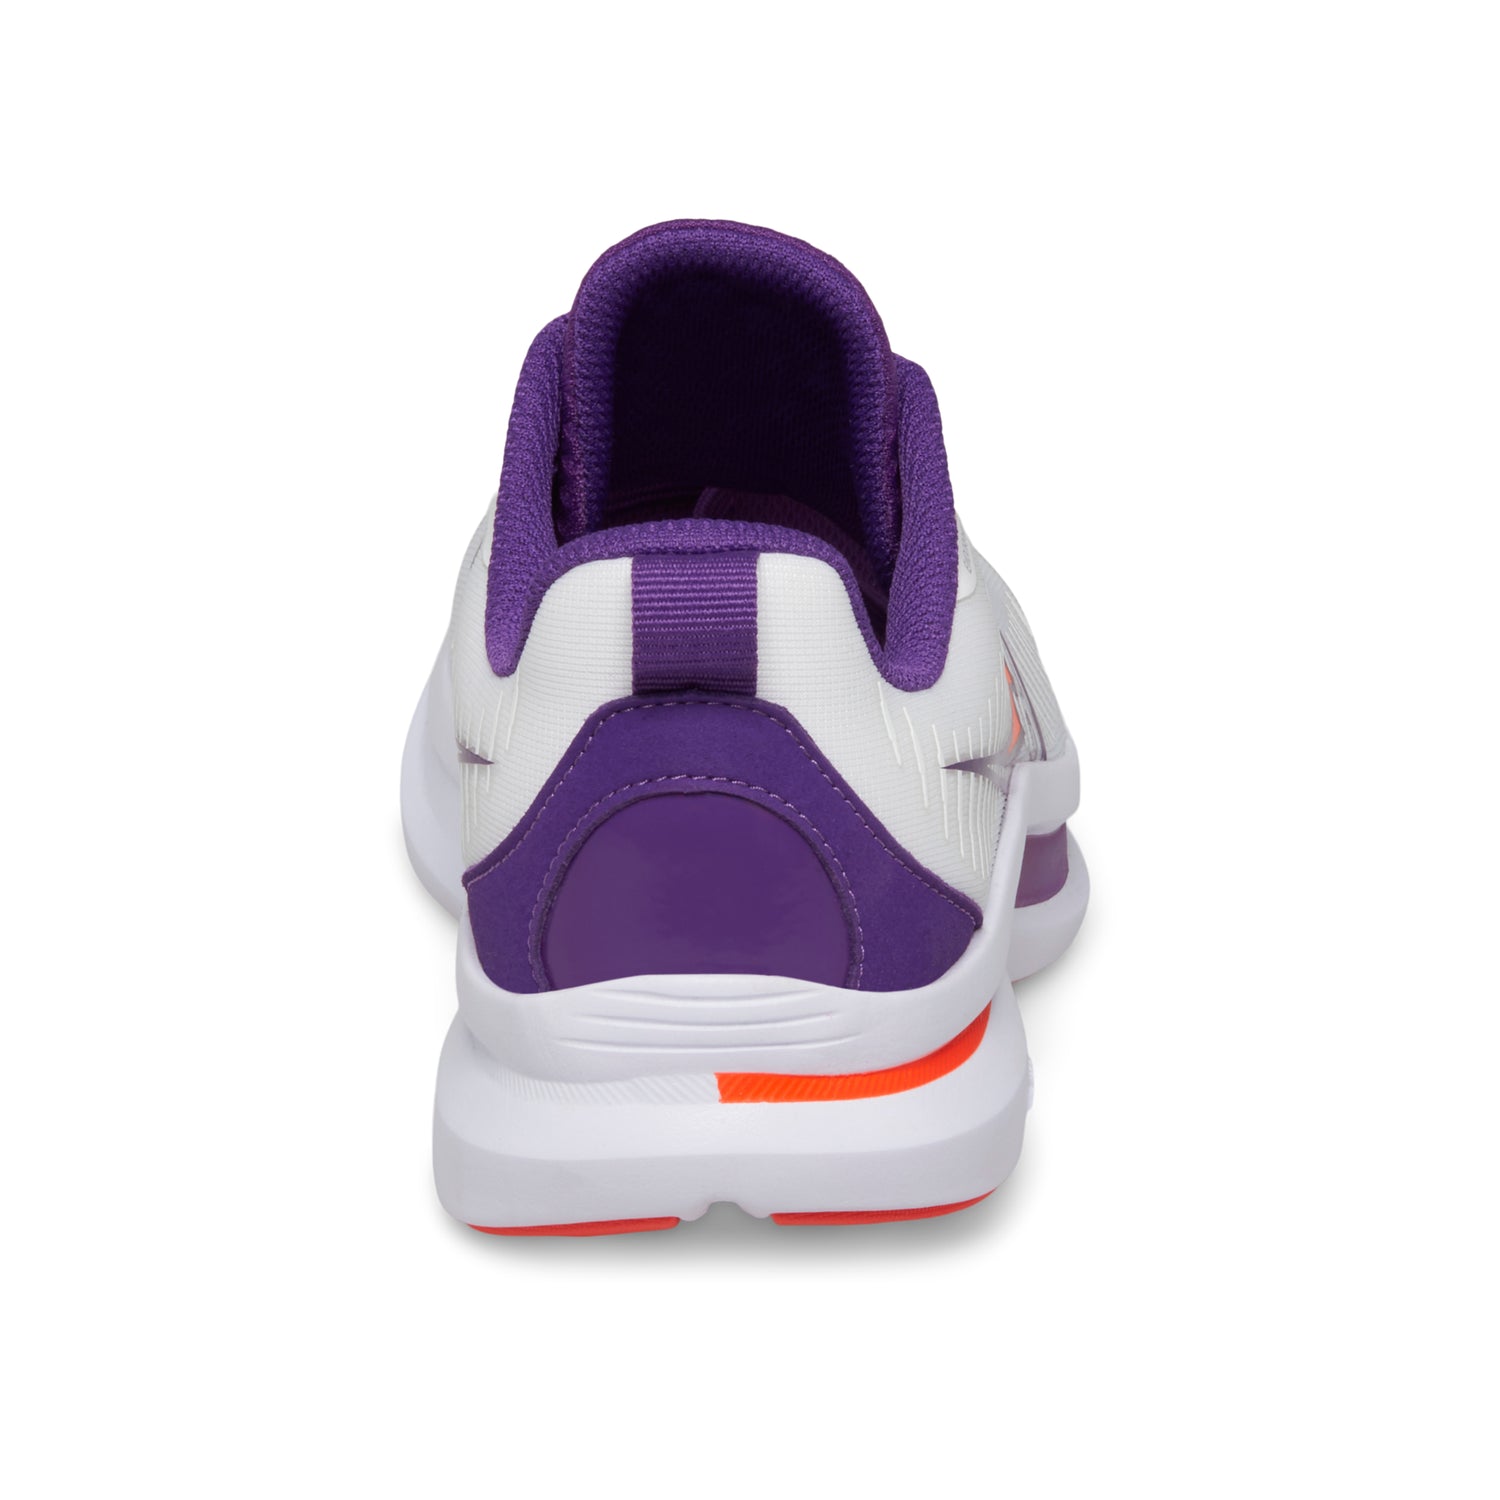 Endorphin KDZ Sneaker White/Purple